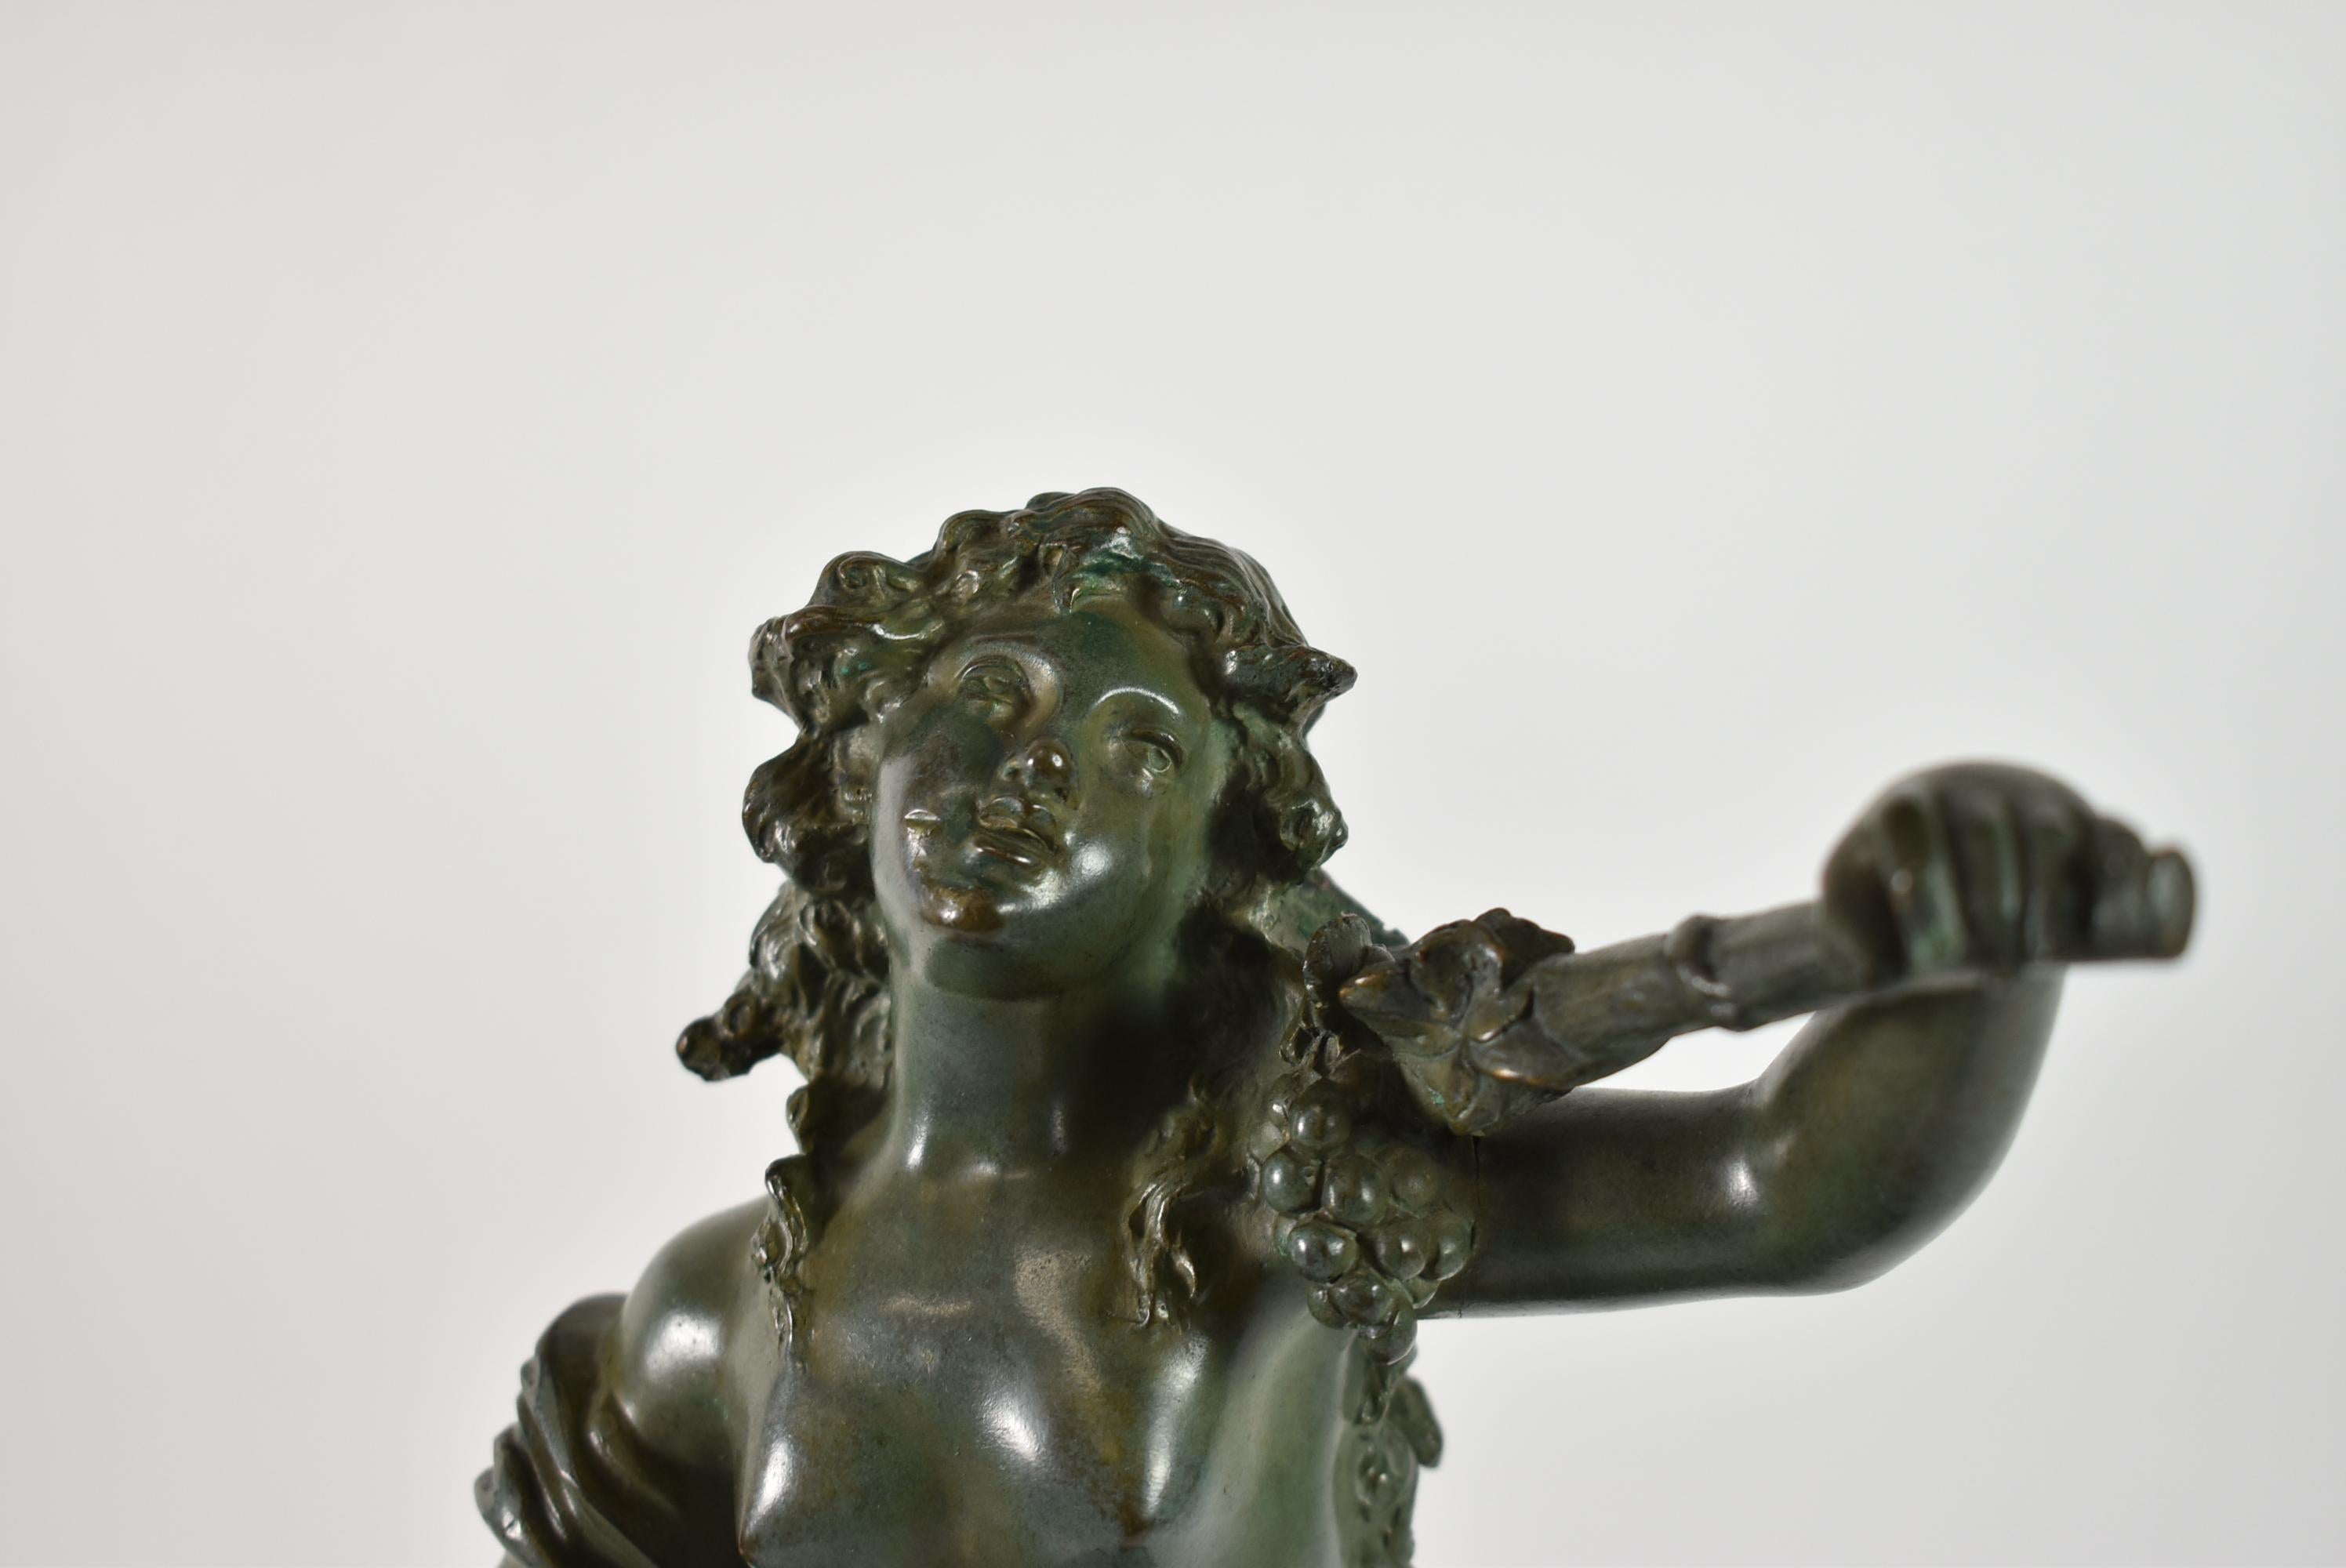 Antique cast bronze Baroque style sculpture of a nude female figure astride goatman. 14.5